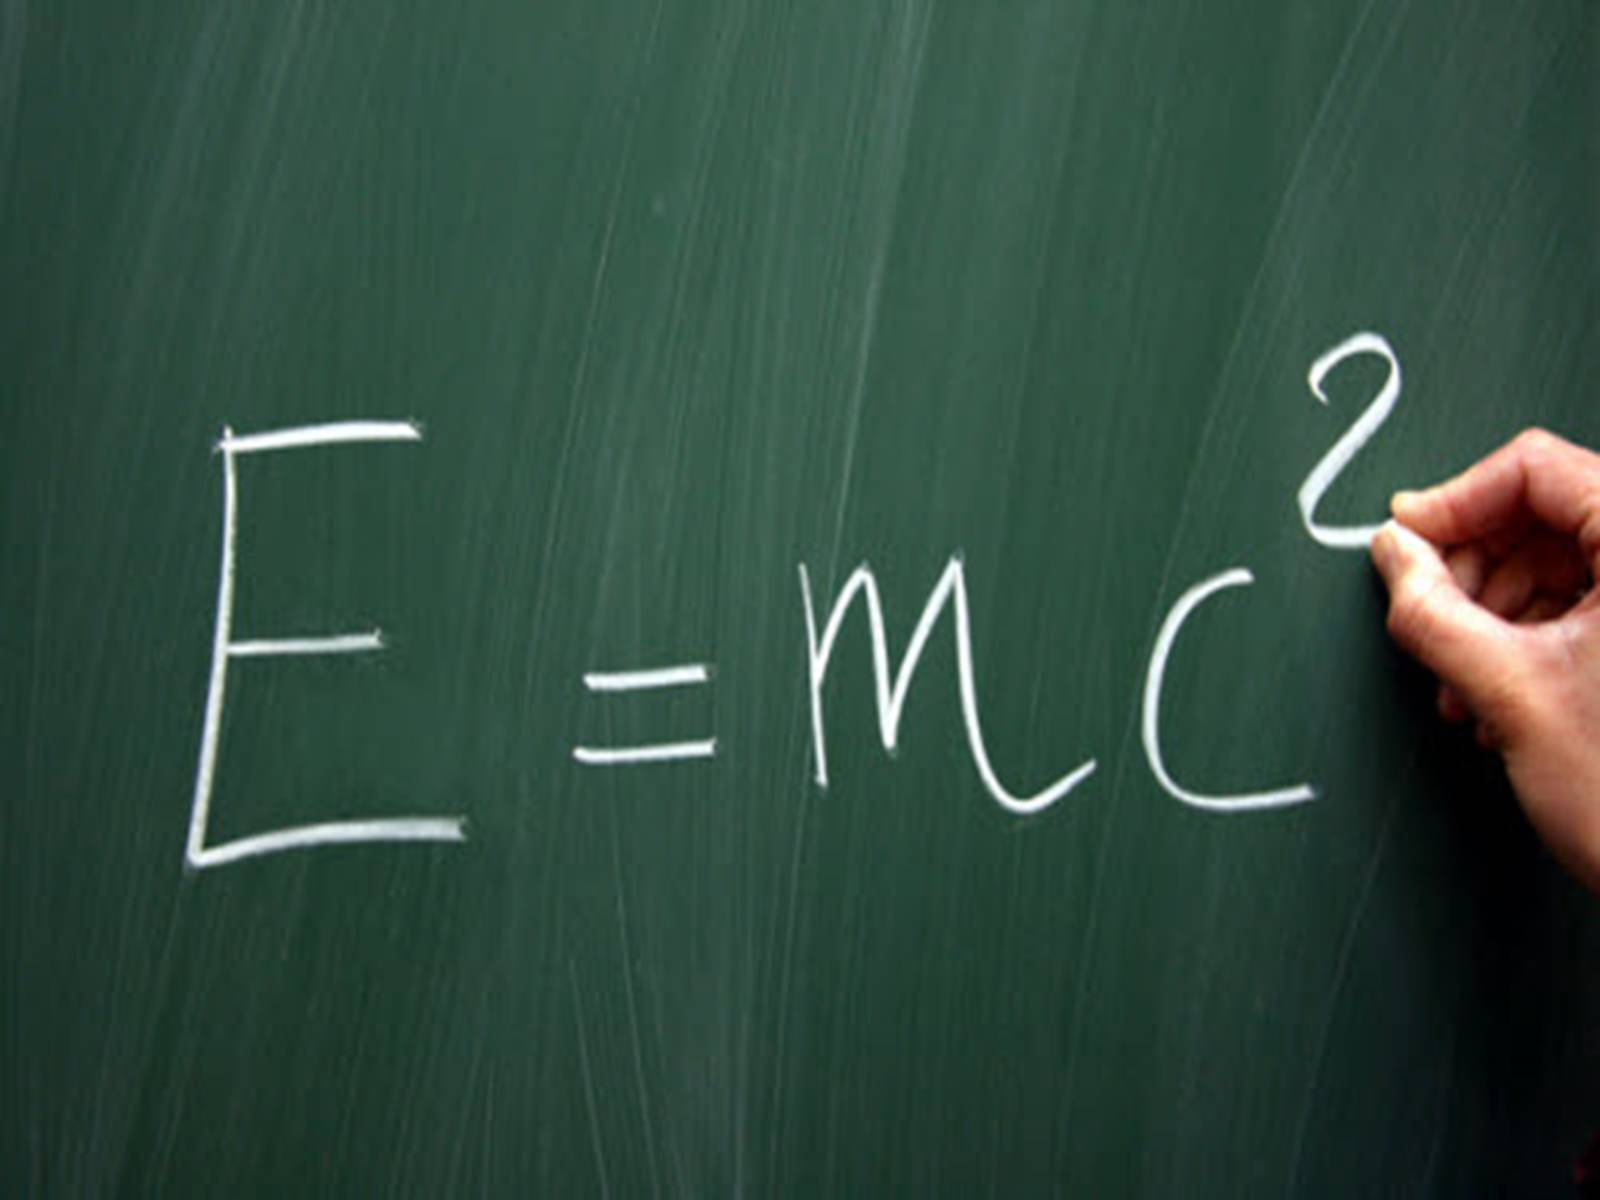 Е равно мс. Эйнштейна е мс2. Формула Эйнштейна e mc2. Теория относительности Эйнштейна e mc2.